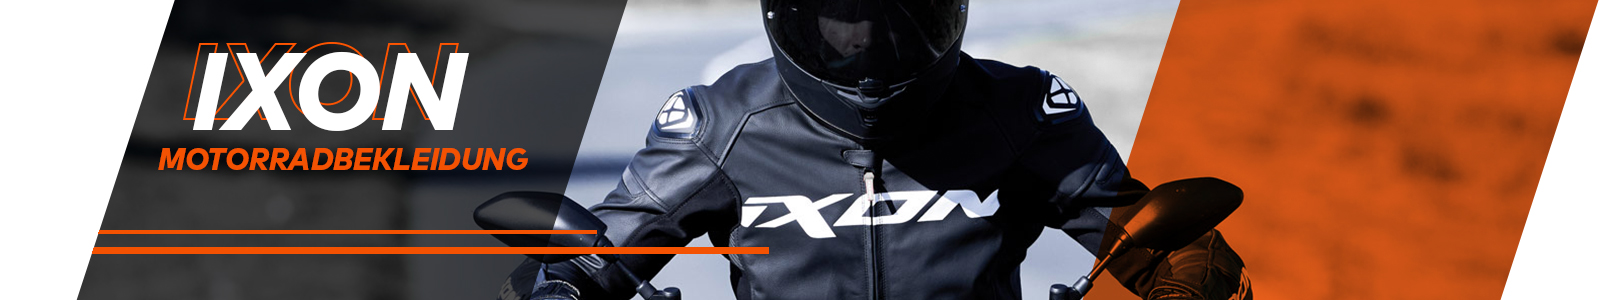 IXON motorbike clothing